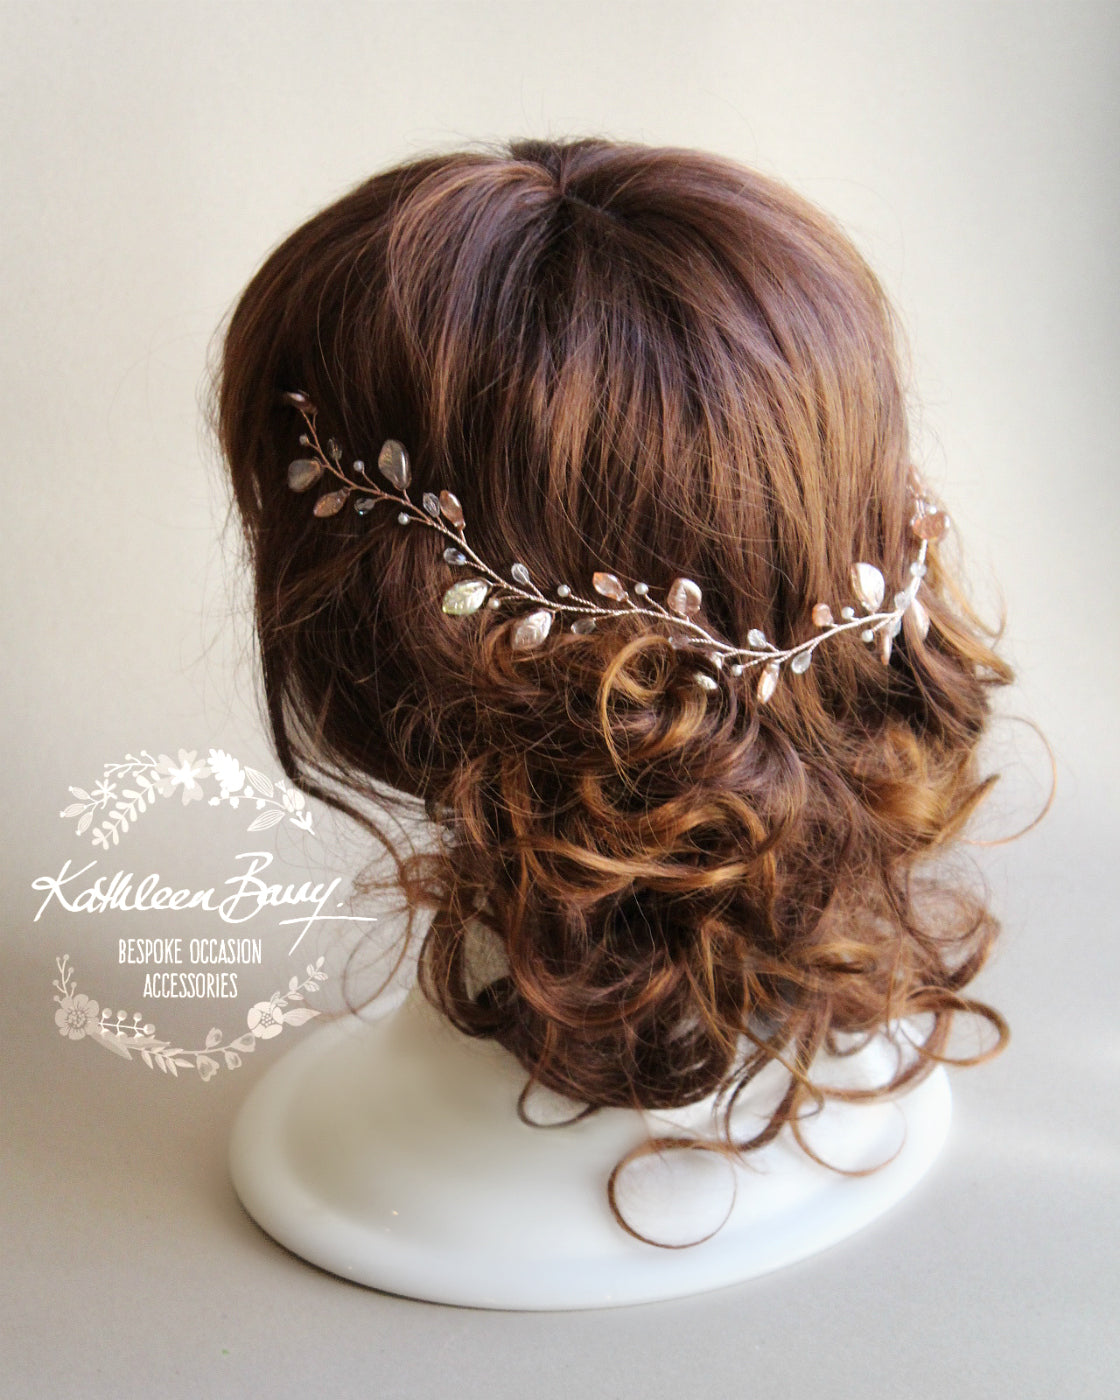 Amanda metallic leaf Crystal & Pearl hair vine / wreath - Silver, gold or rose gold.